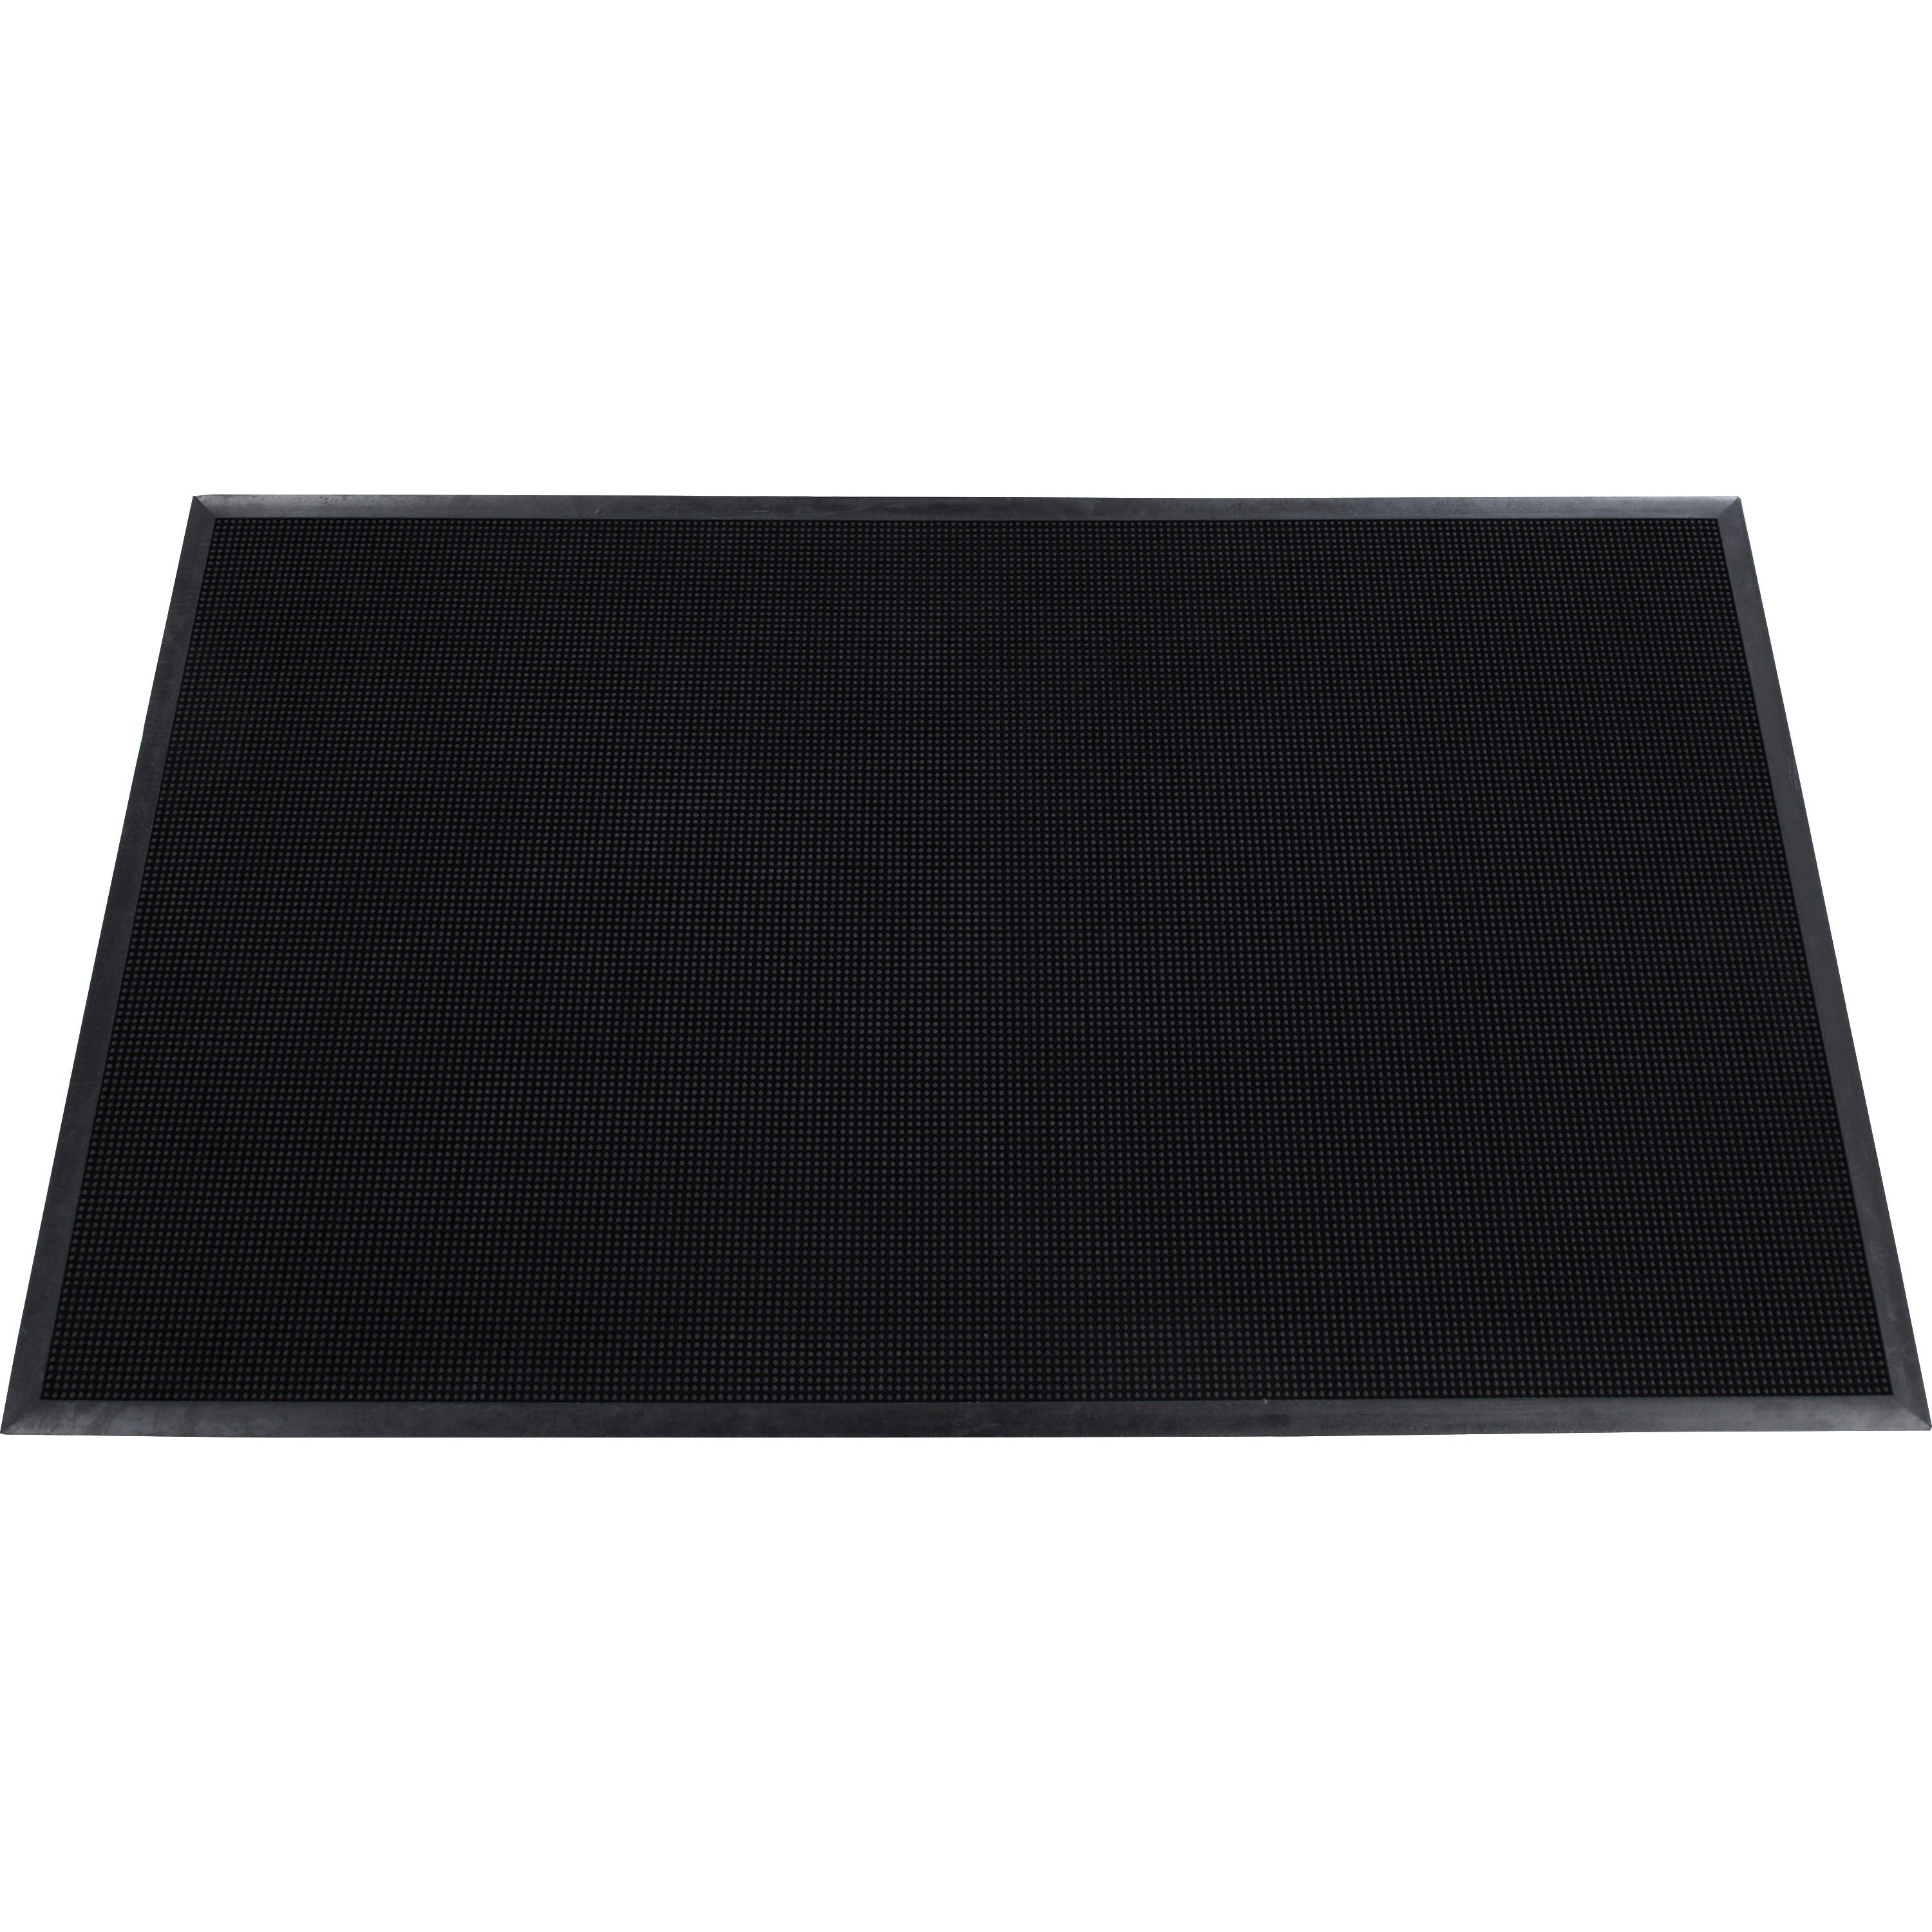 genuine-joe-brush-tip-scraper-mat-indoor-outdoor-60-length-x-36-width-x-0400-thickness-rectangular-rubber-black-1each_gjo70381 - 2